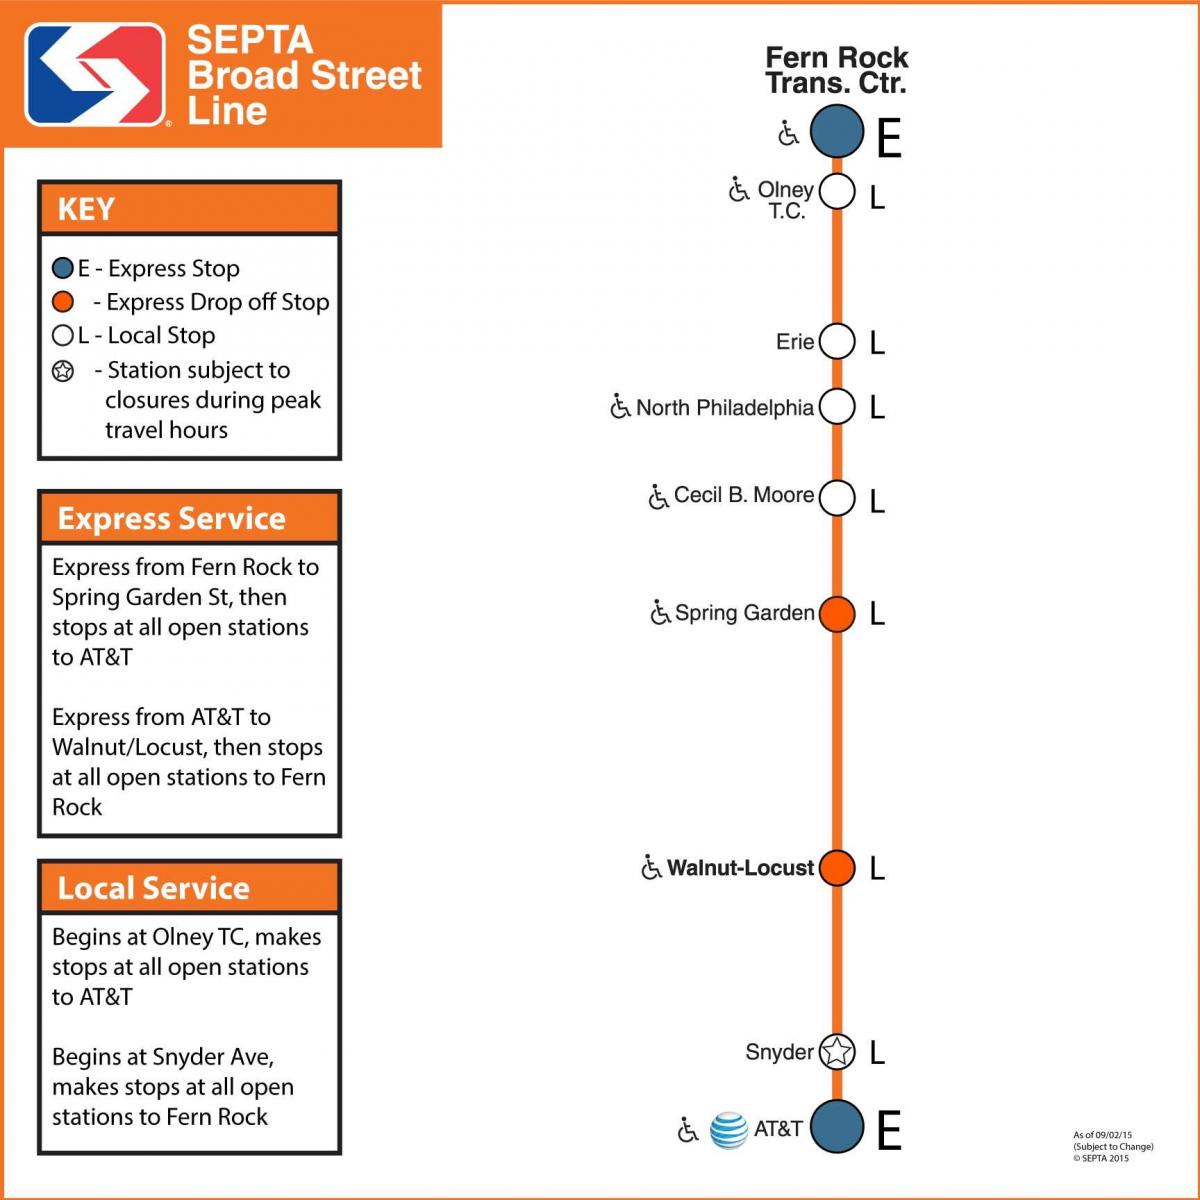 map of Septa broad street line